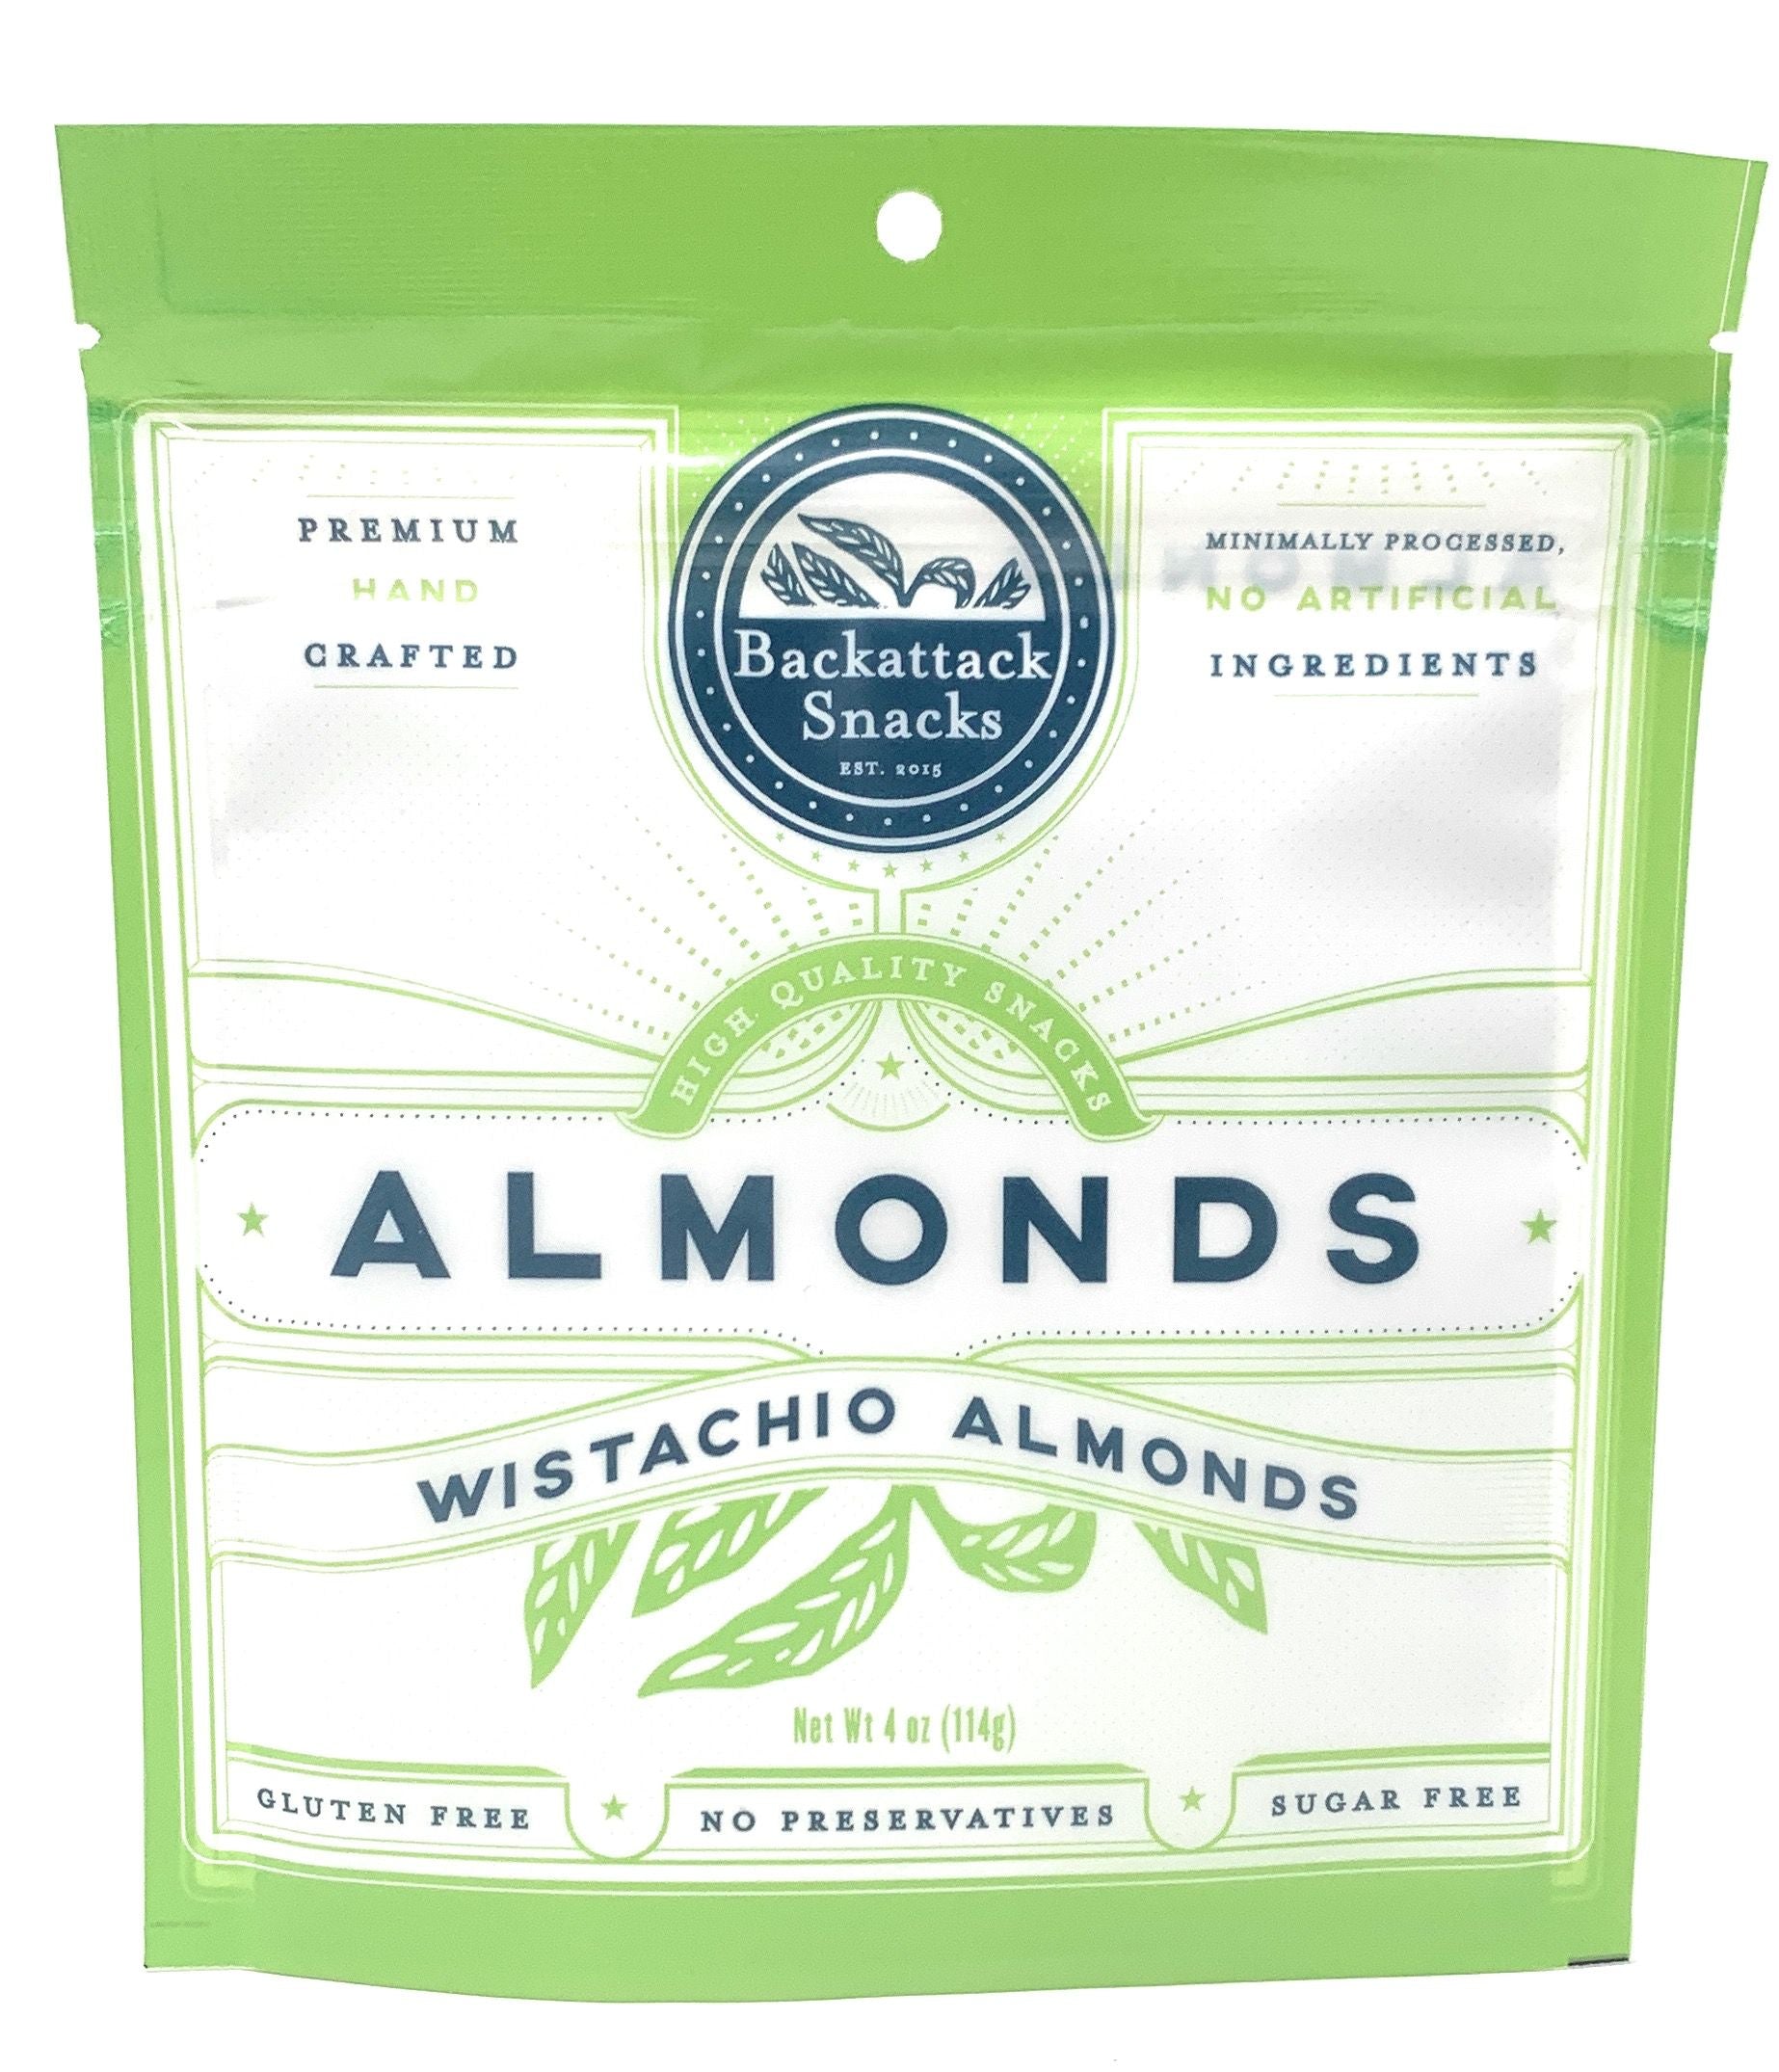 Wholesale Case of 4oz Wistachio Almonds - Backattack Snacks 